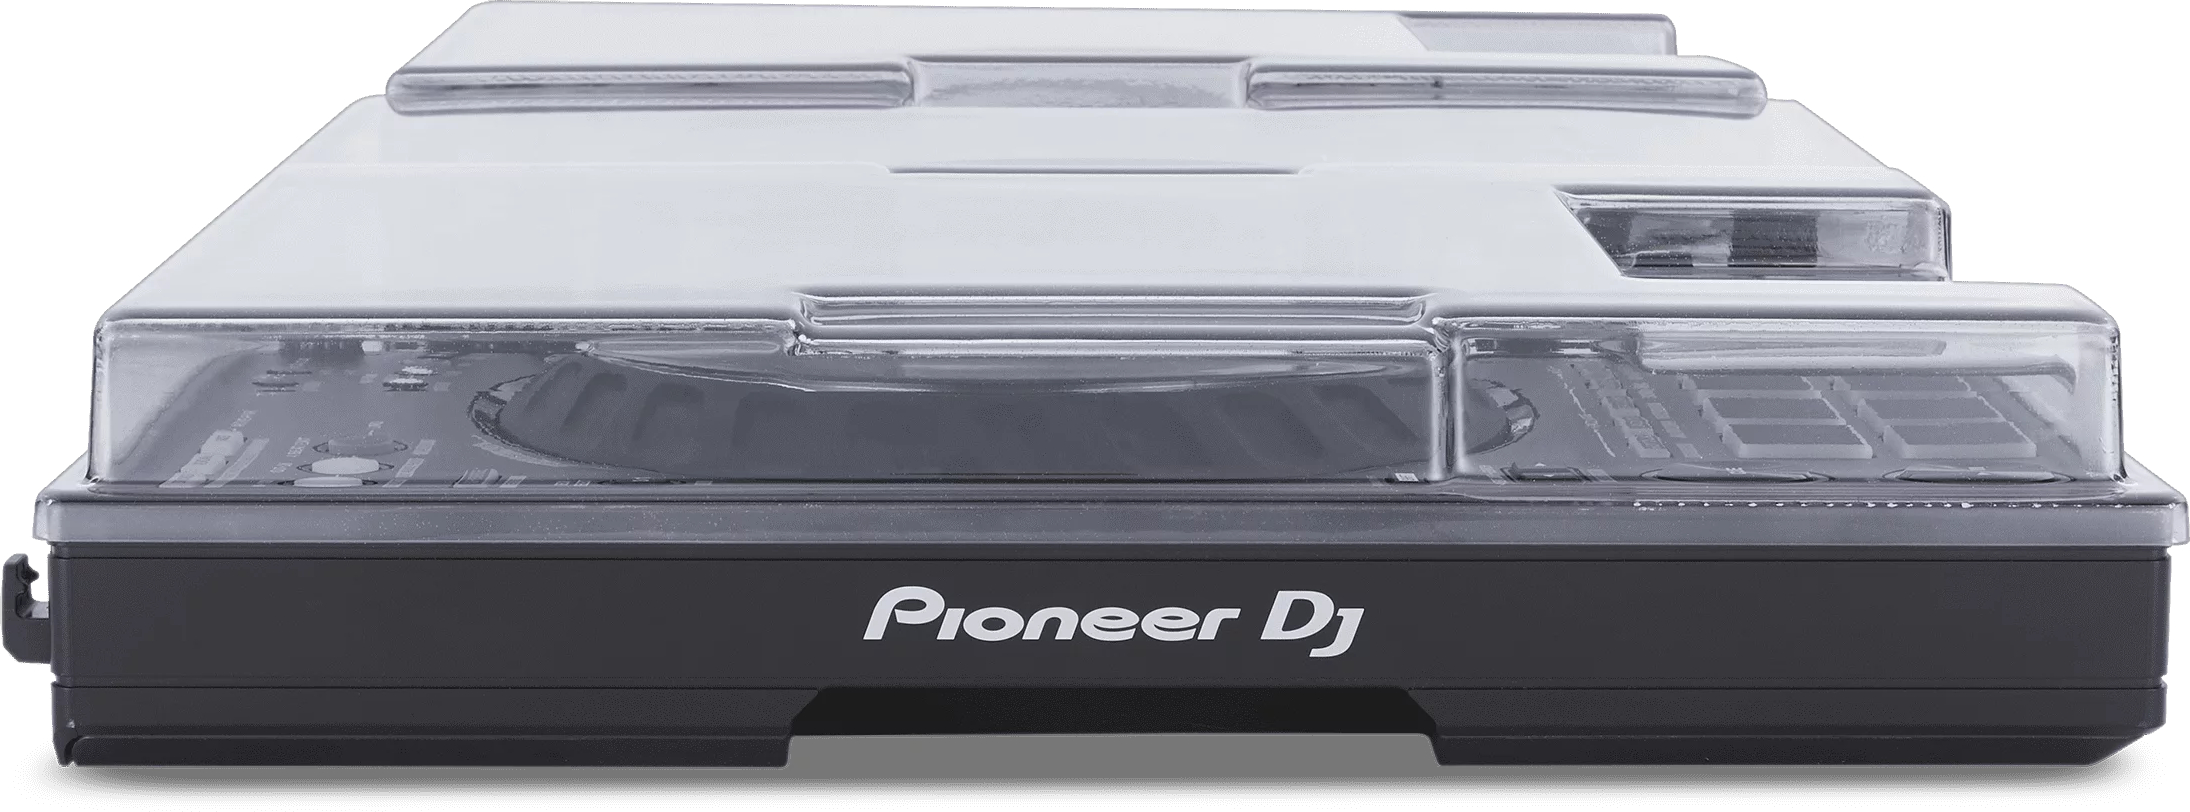 Decksaver Pioneer Dj Ddj-flx10 - DJ-Tasche - Variation 1